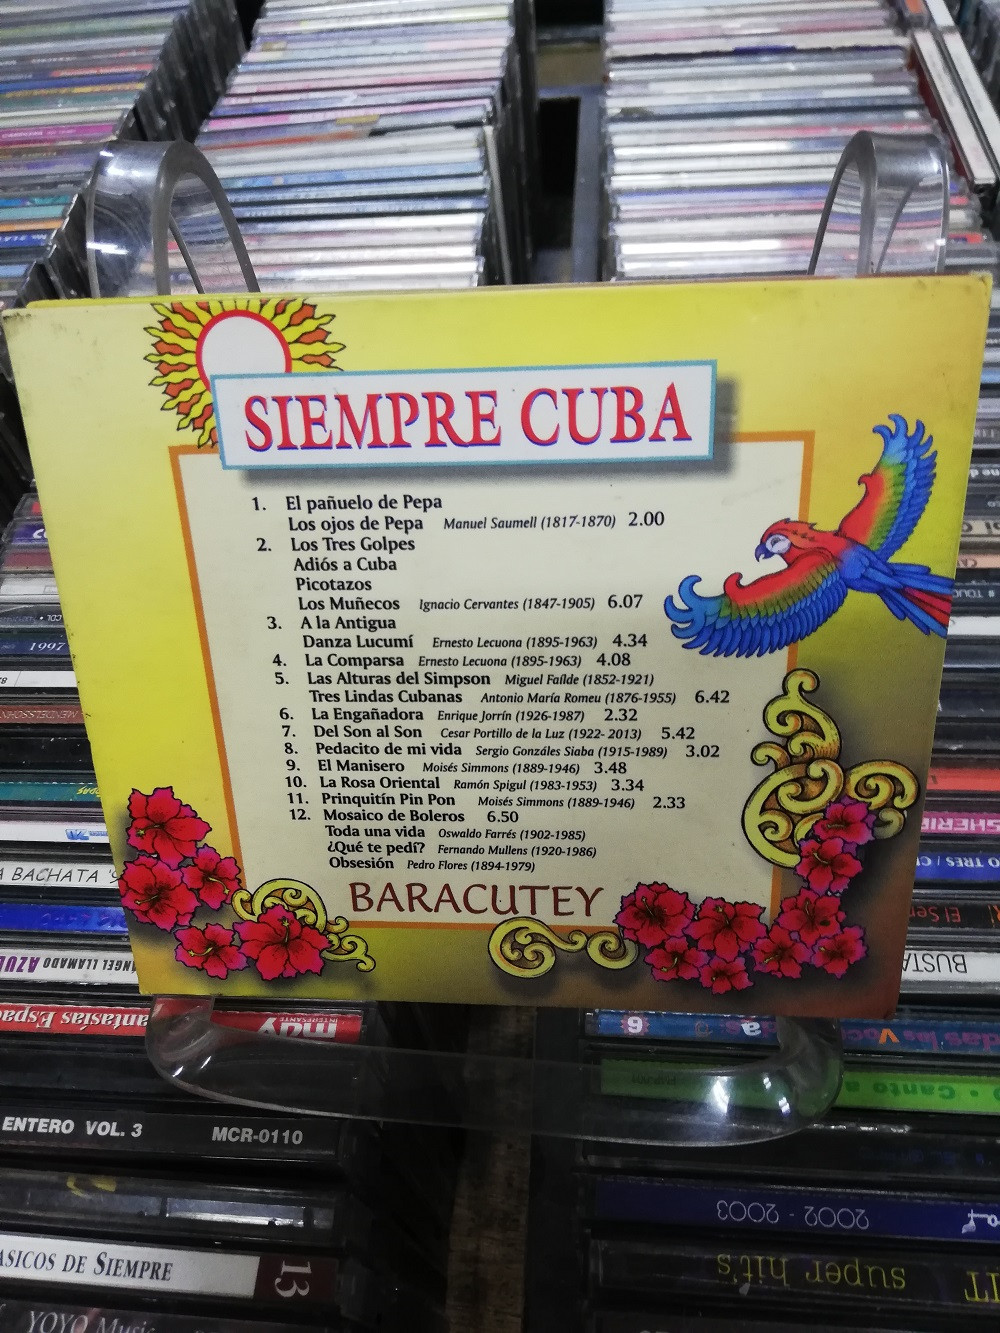 Imagen CD BARACUTEY - SIEMPRE CUBA 2